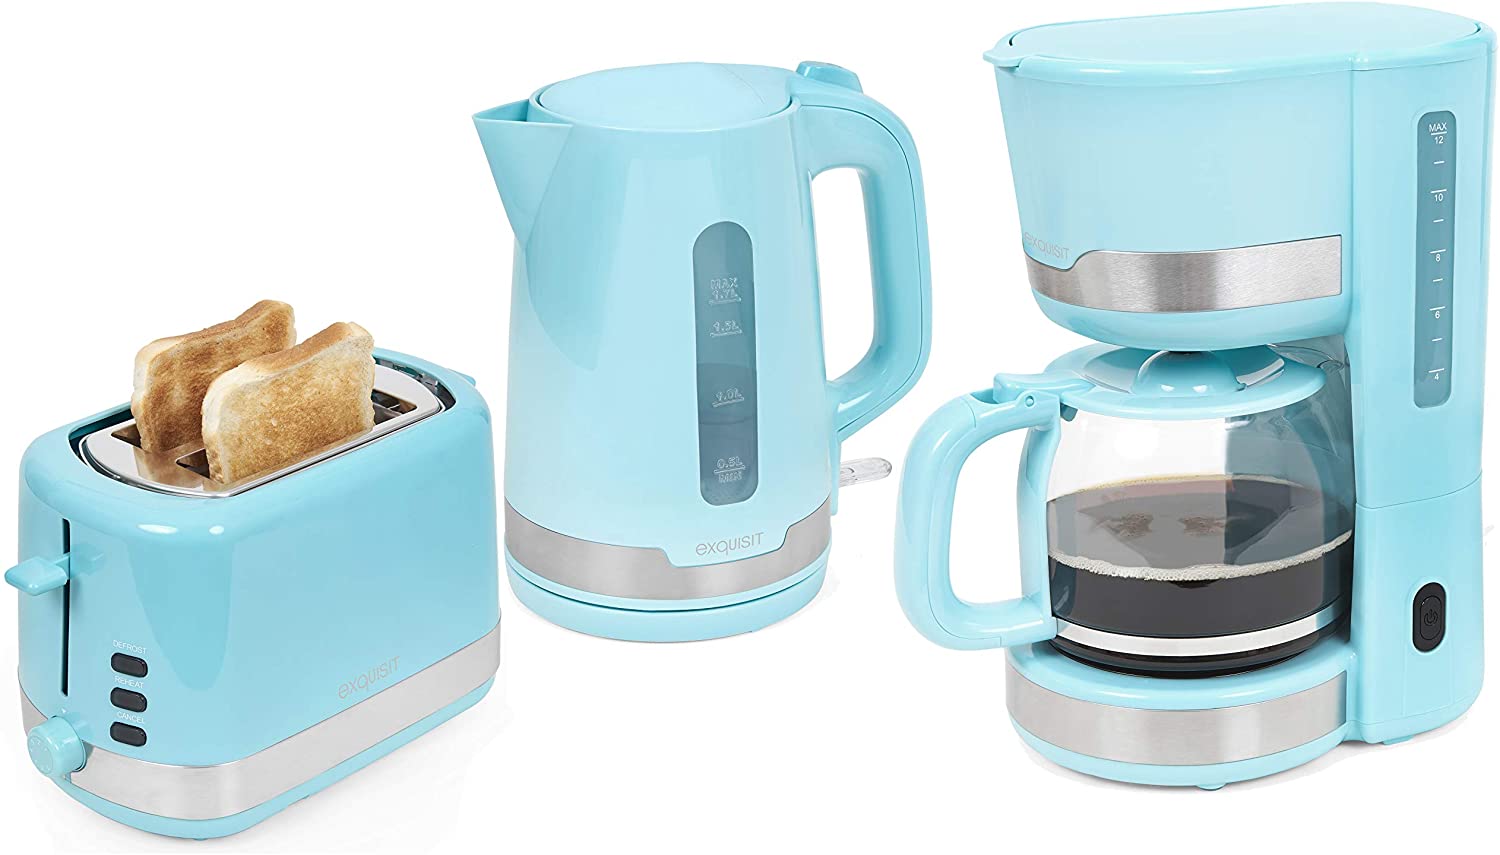 Exquisit Breakfast Set FS 7102 ppi | 2 Slice Toaster | Kettle | Tea Maker | Coffee Machine | Blue | Breakfast | Toast and Coffee